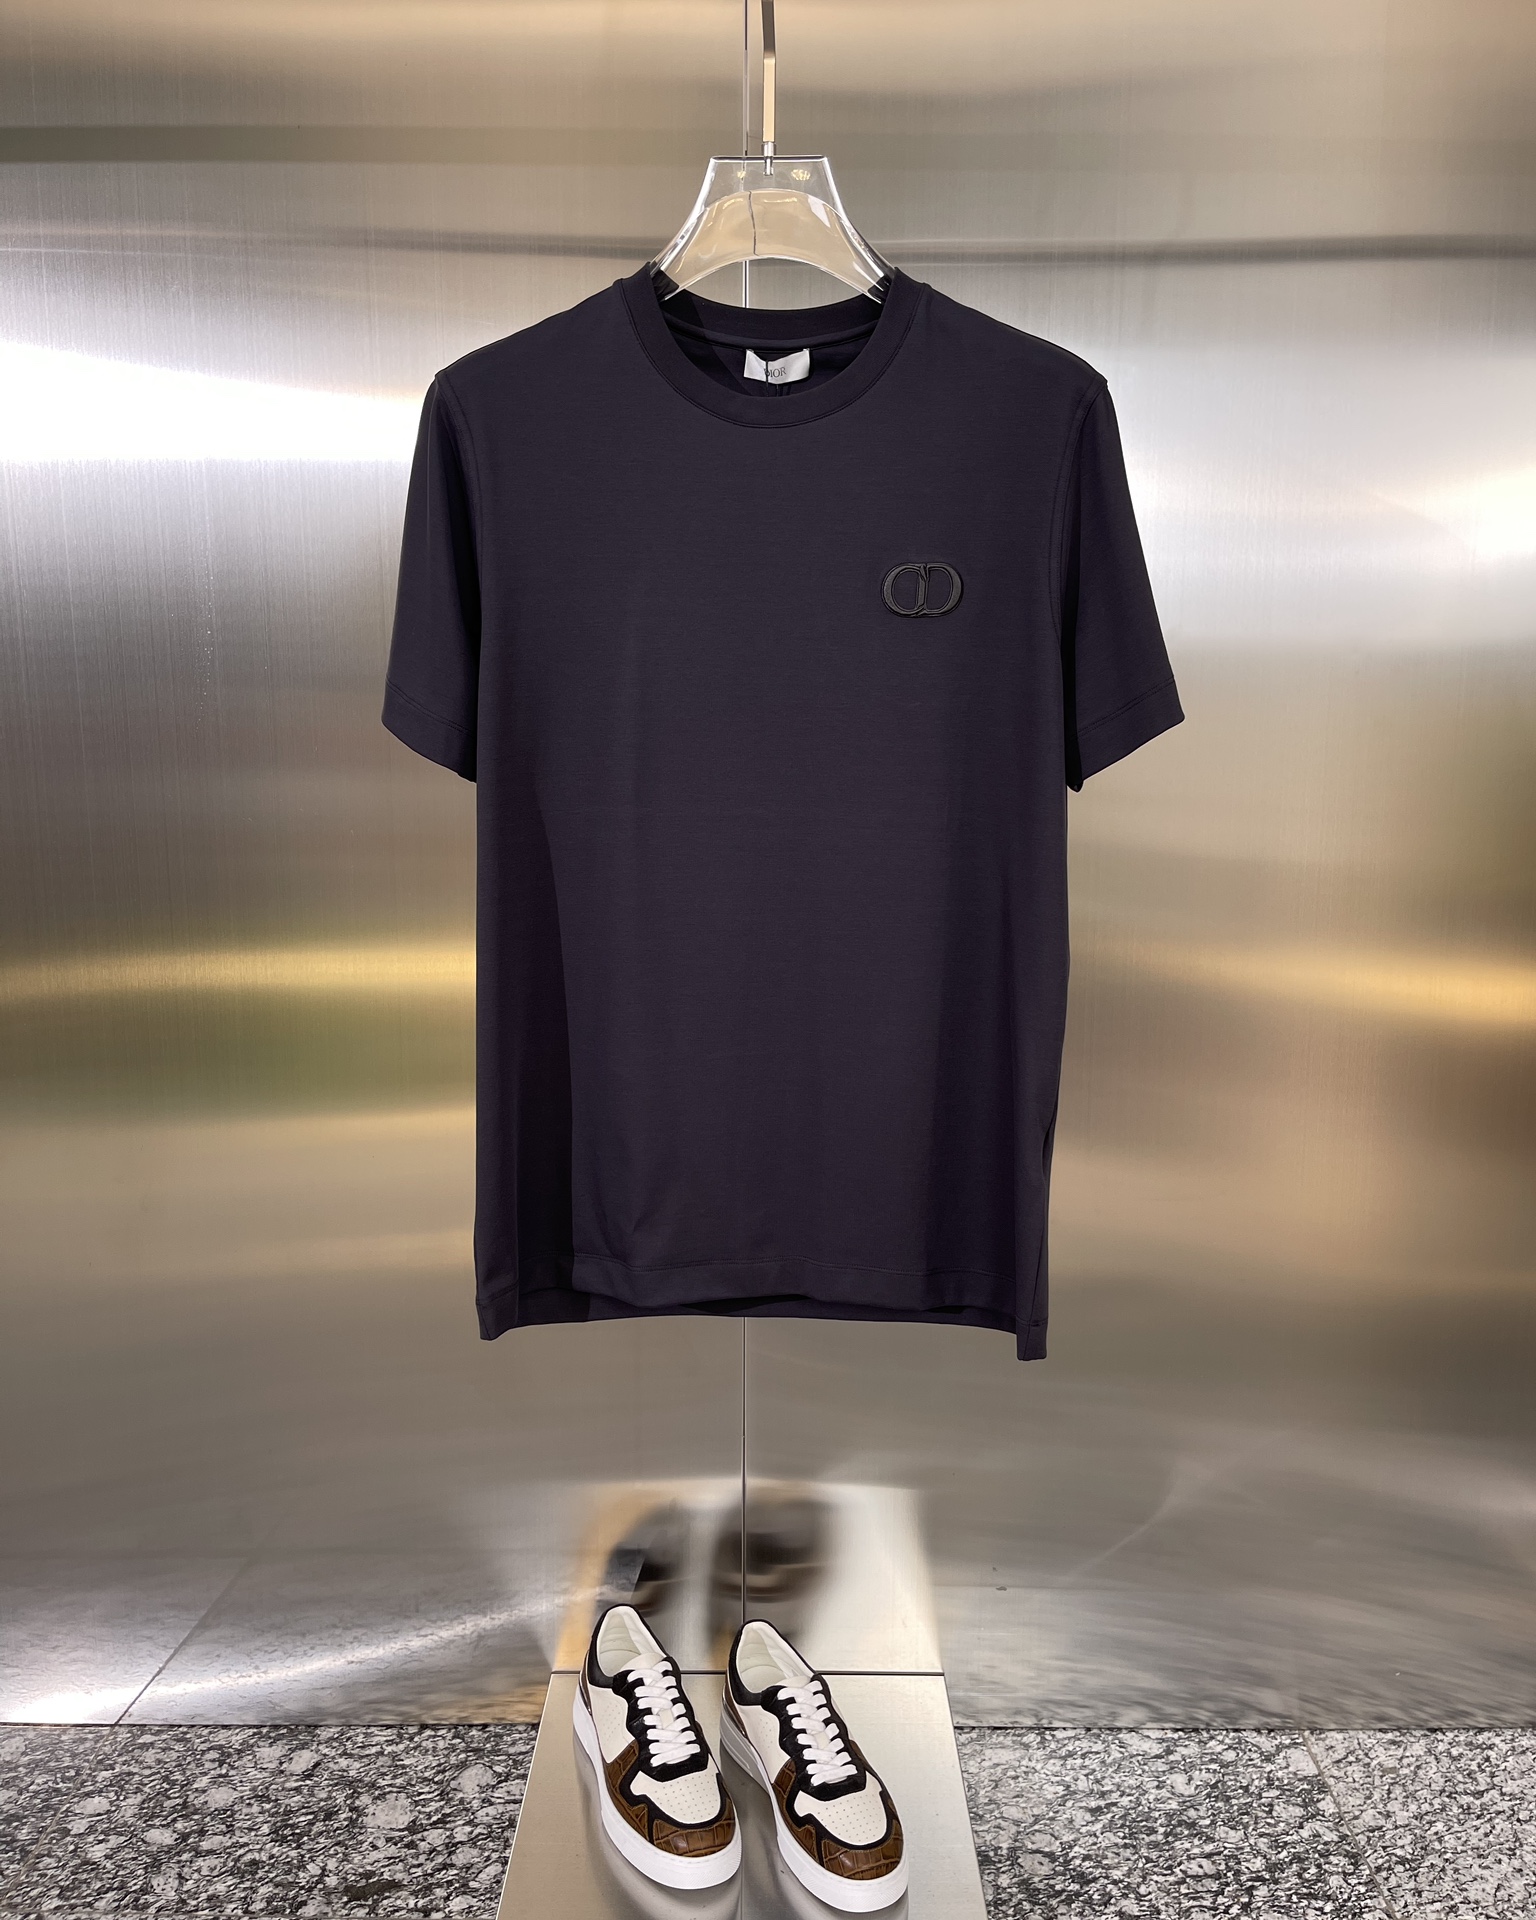 Dior Clothing T-Shirt Men Cotton Fashion Short Sleeve